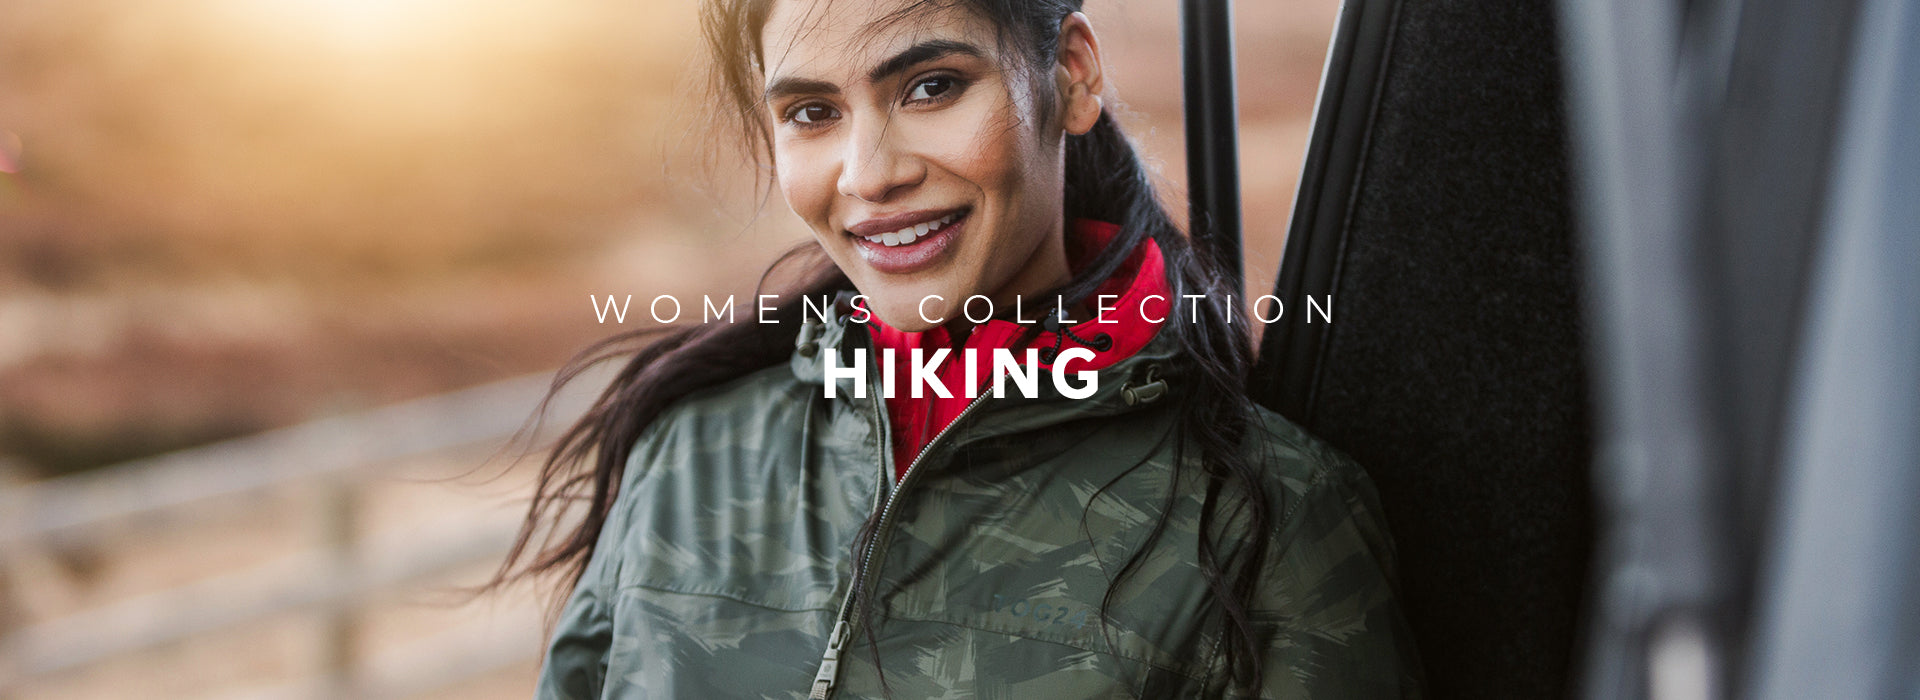 Womens hiking clothing